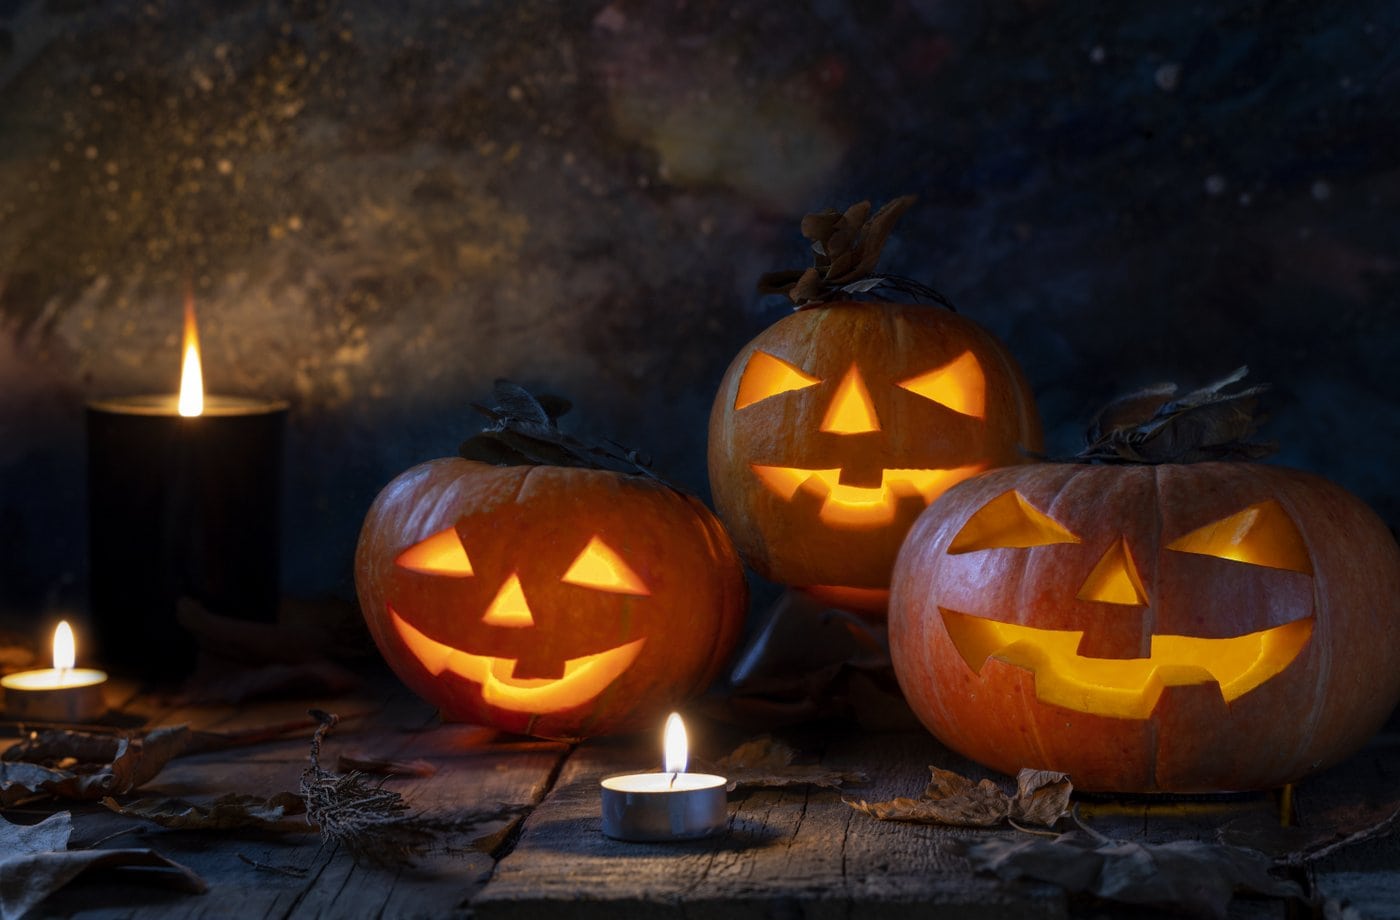 Jack o' Lanterns - Halloween pumpkins